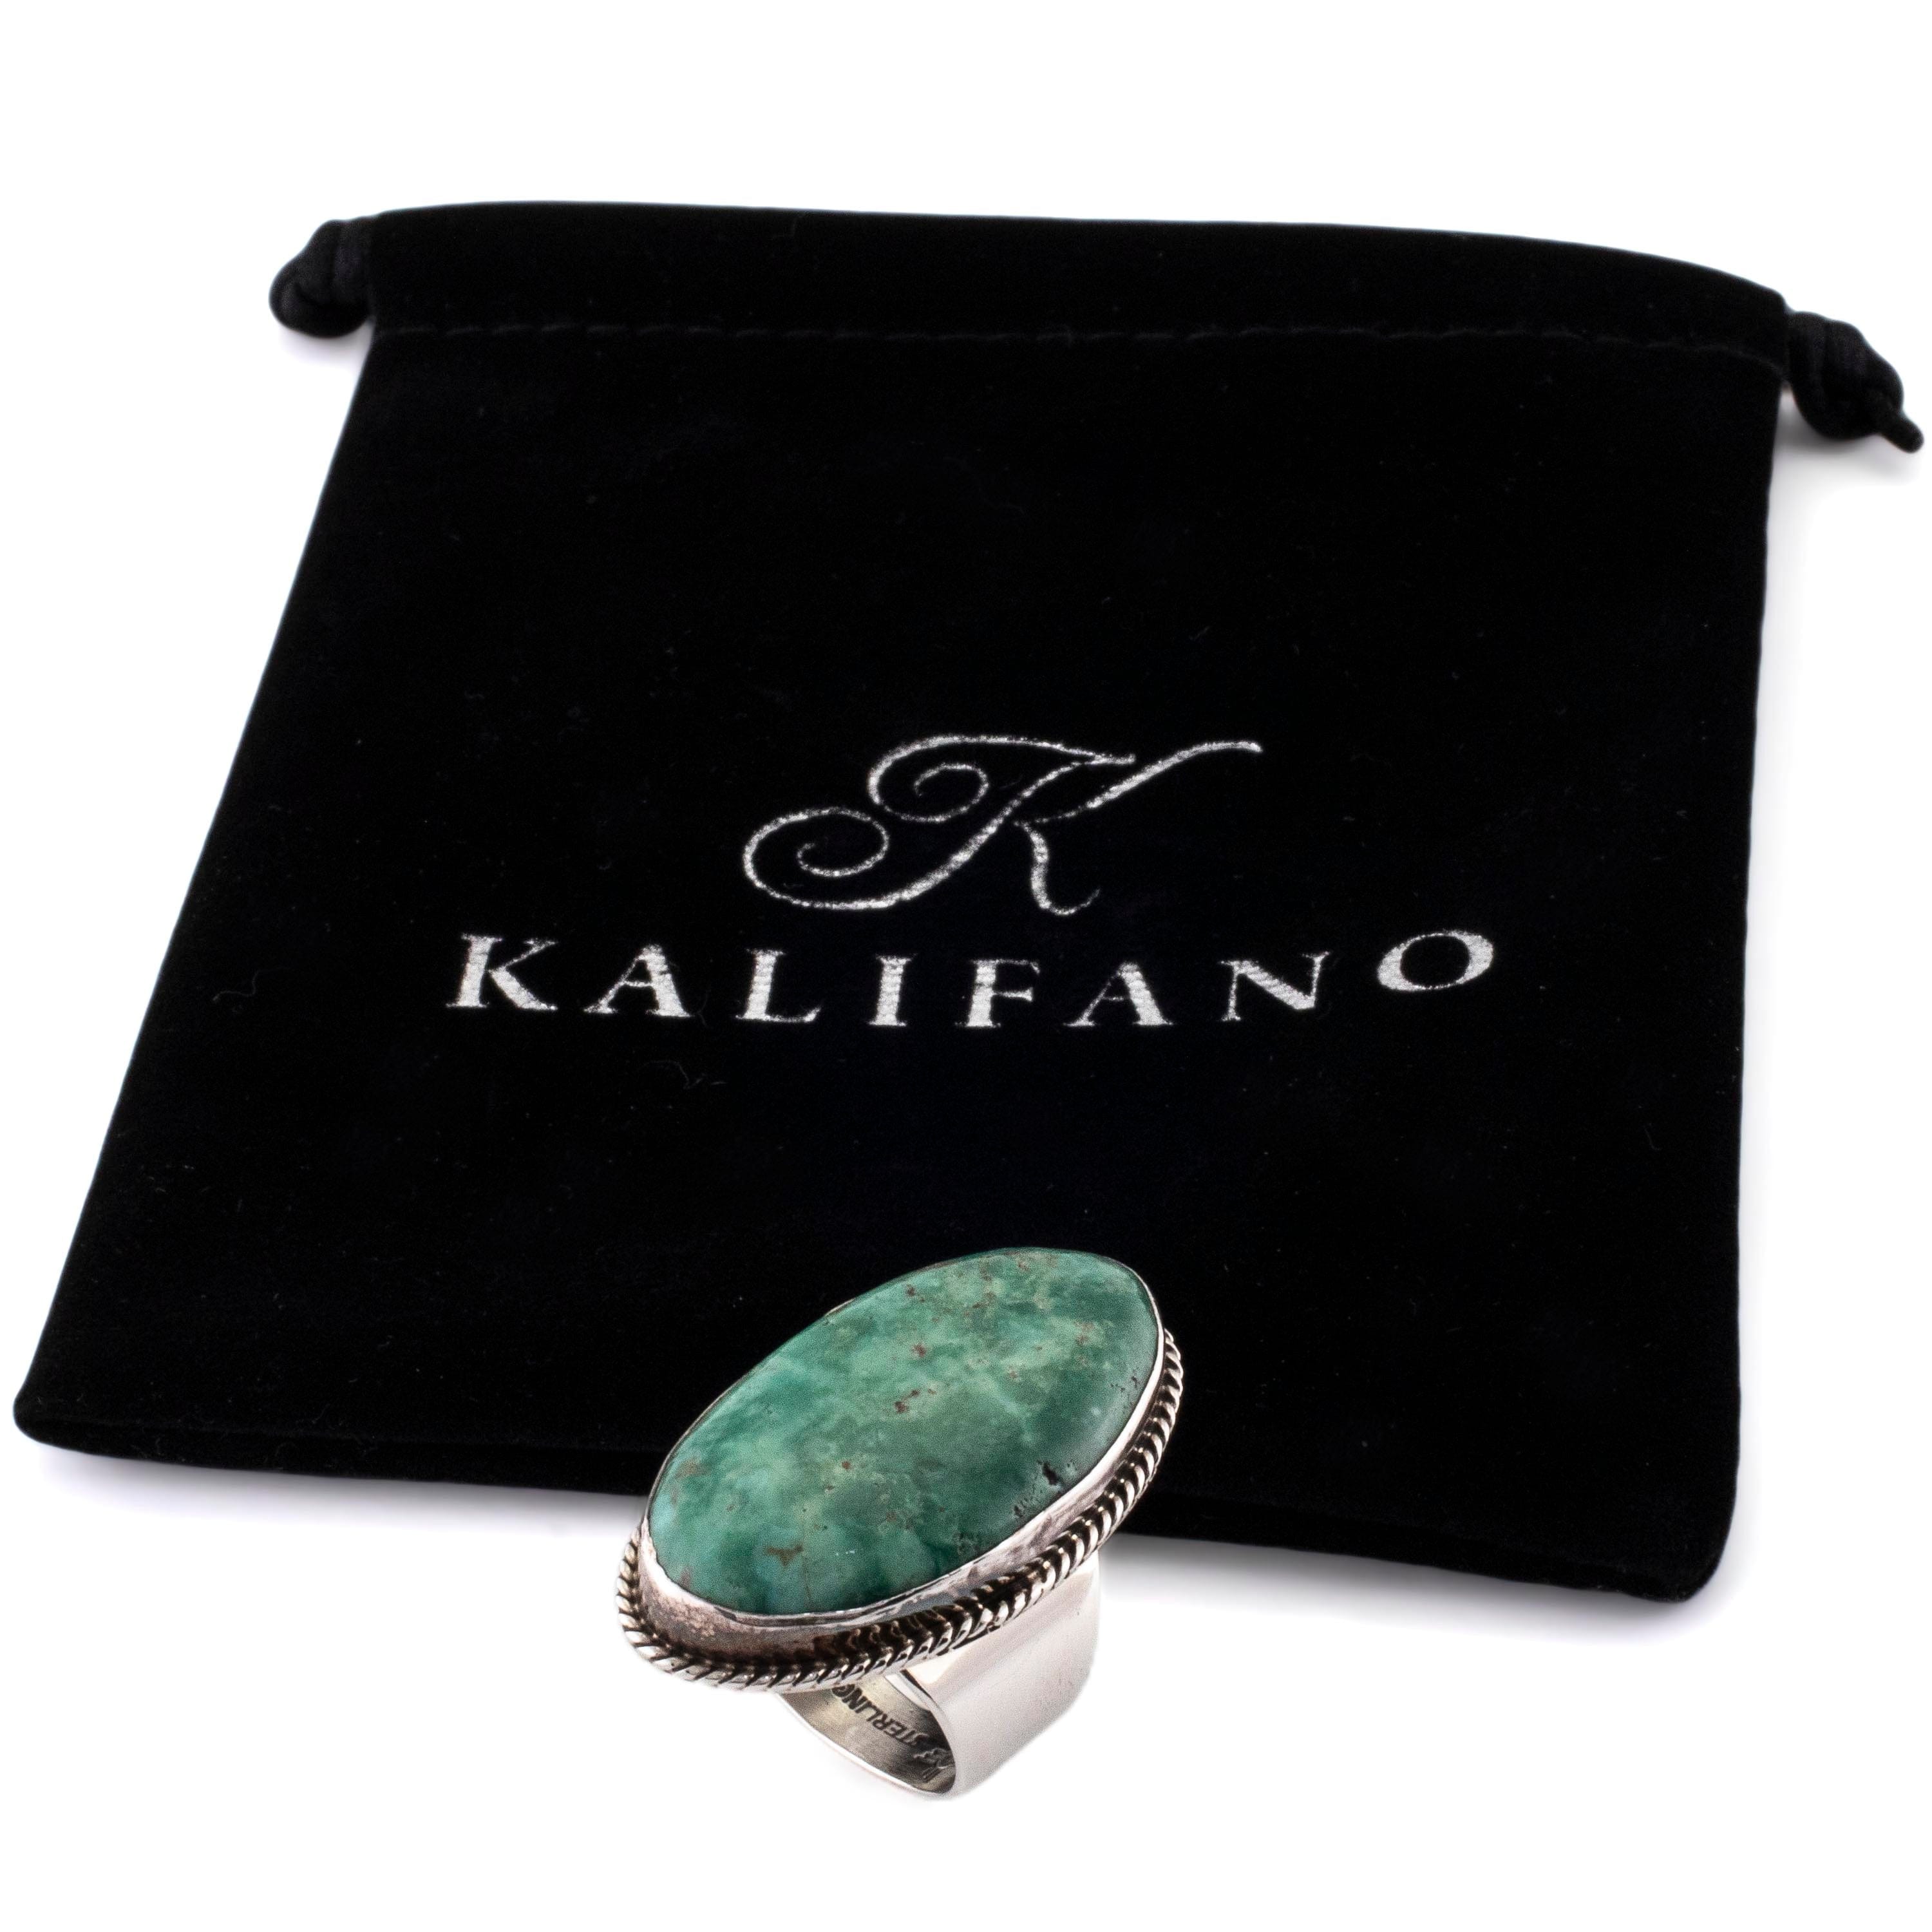 Kalifano Native American Jewelry 8 Ray Tafoya Navajo Green Campitos Turquoise USA Native American Made 925 Sterling Silver Adjustable Ring NAR400.090.8